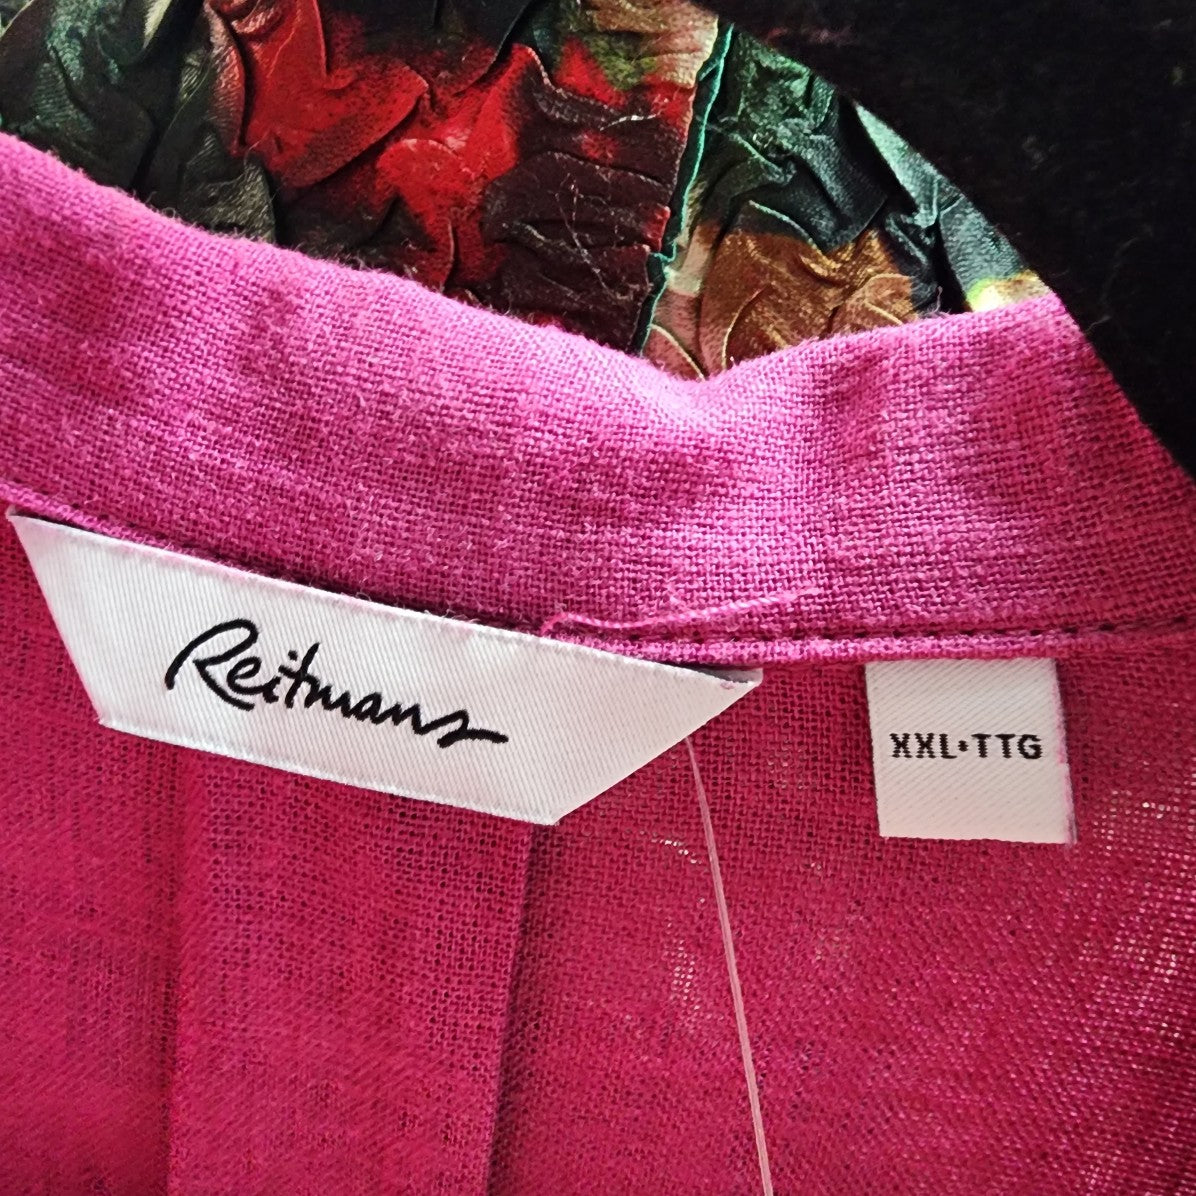 Reitmans Pink Linen Blend Button Up Collared Top Size 2X